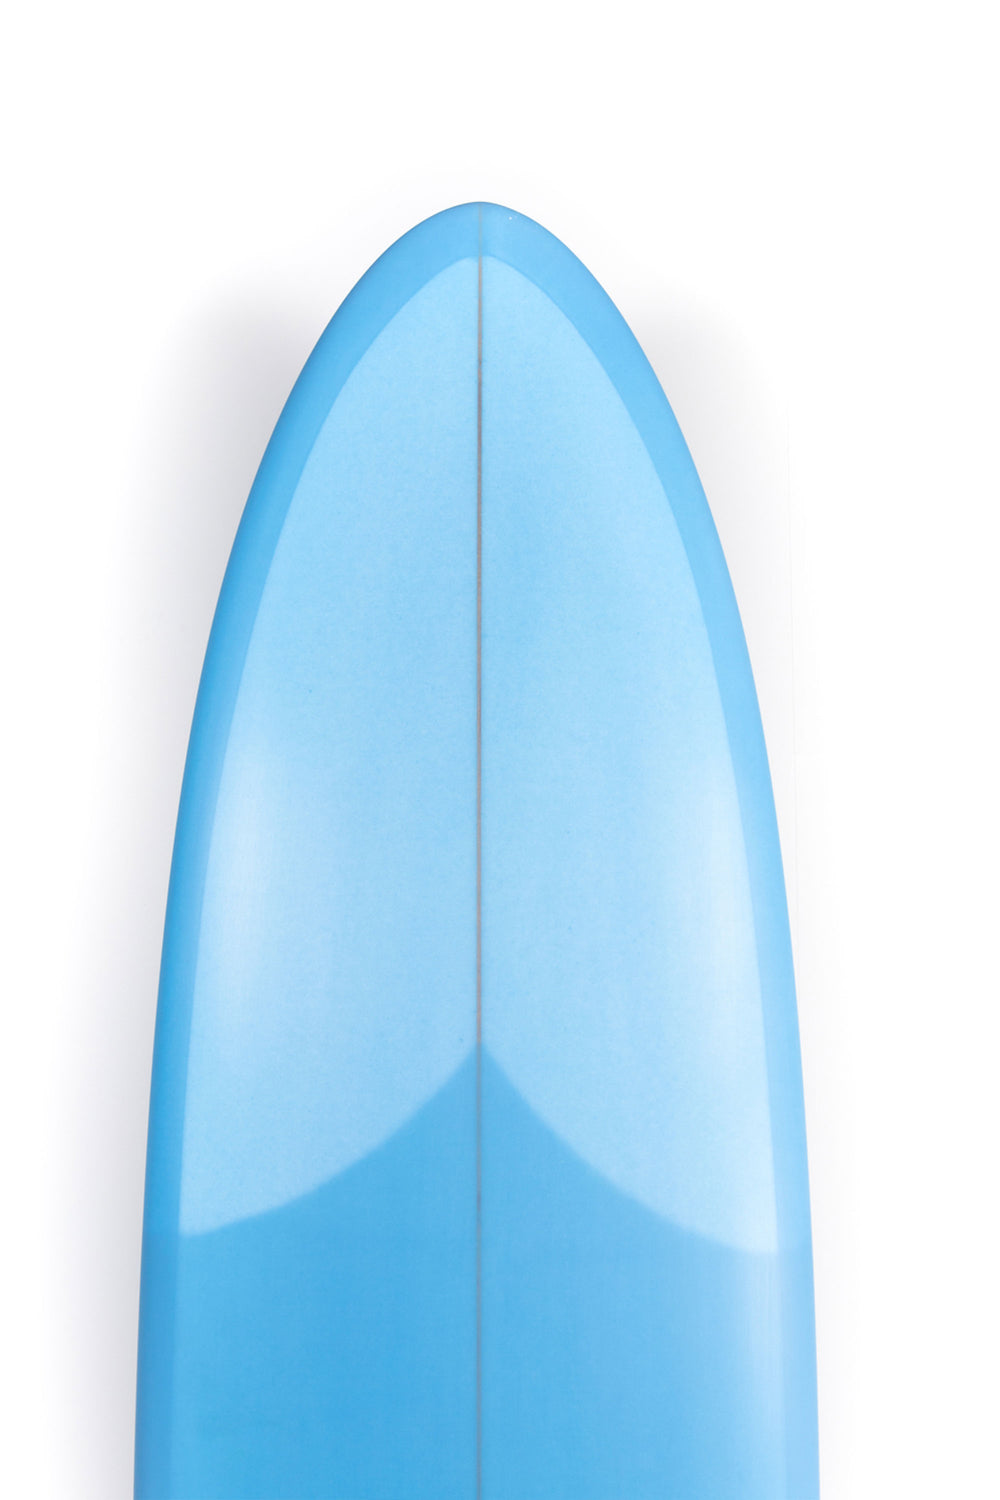 Christenson Surfboards - HUNTSMAN - 7'0